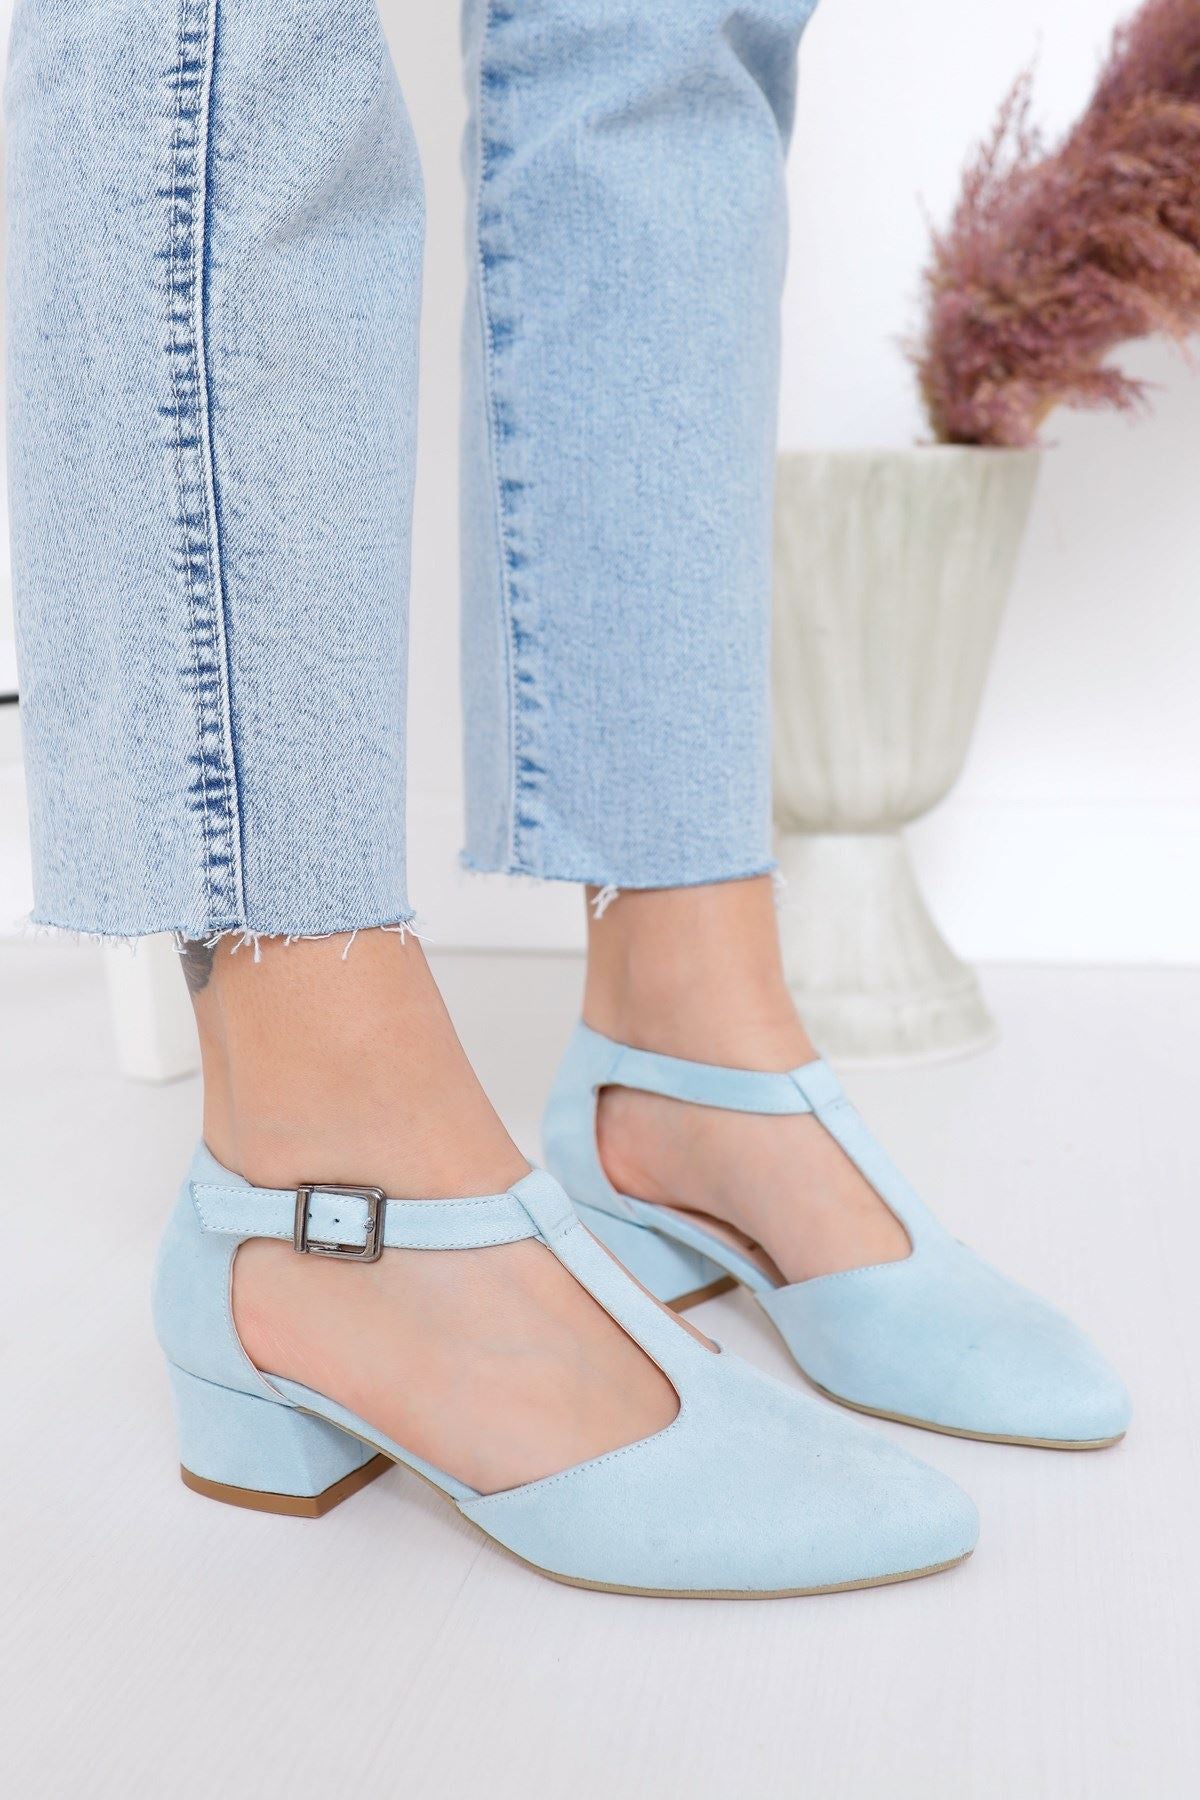 Jane Heels Baby Blue Suede Shoes - STREETMODE™